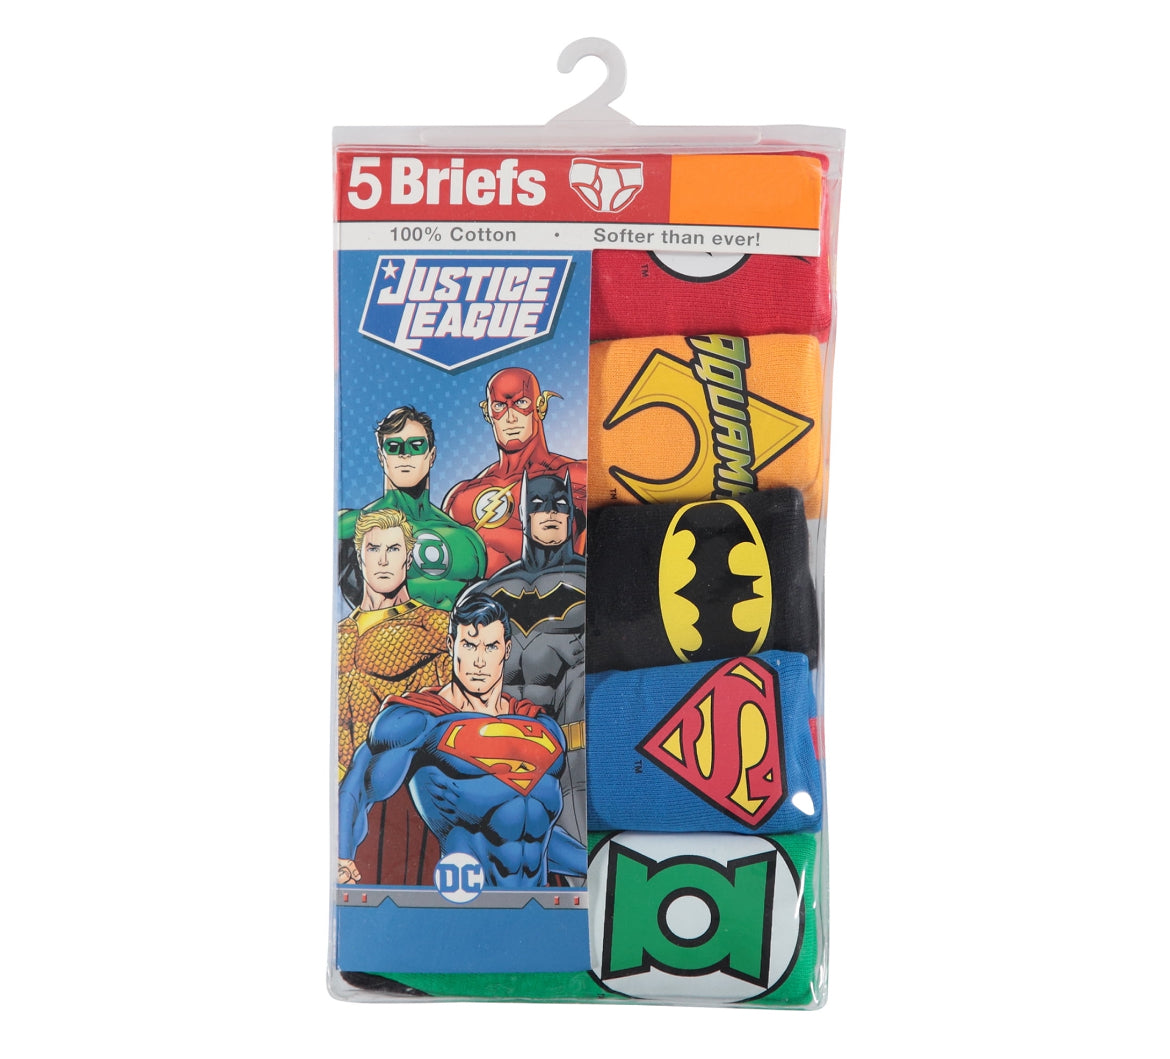 Justice League Boys Briefs Underwear, 5 Pack